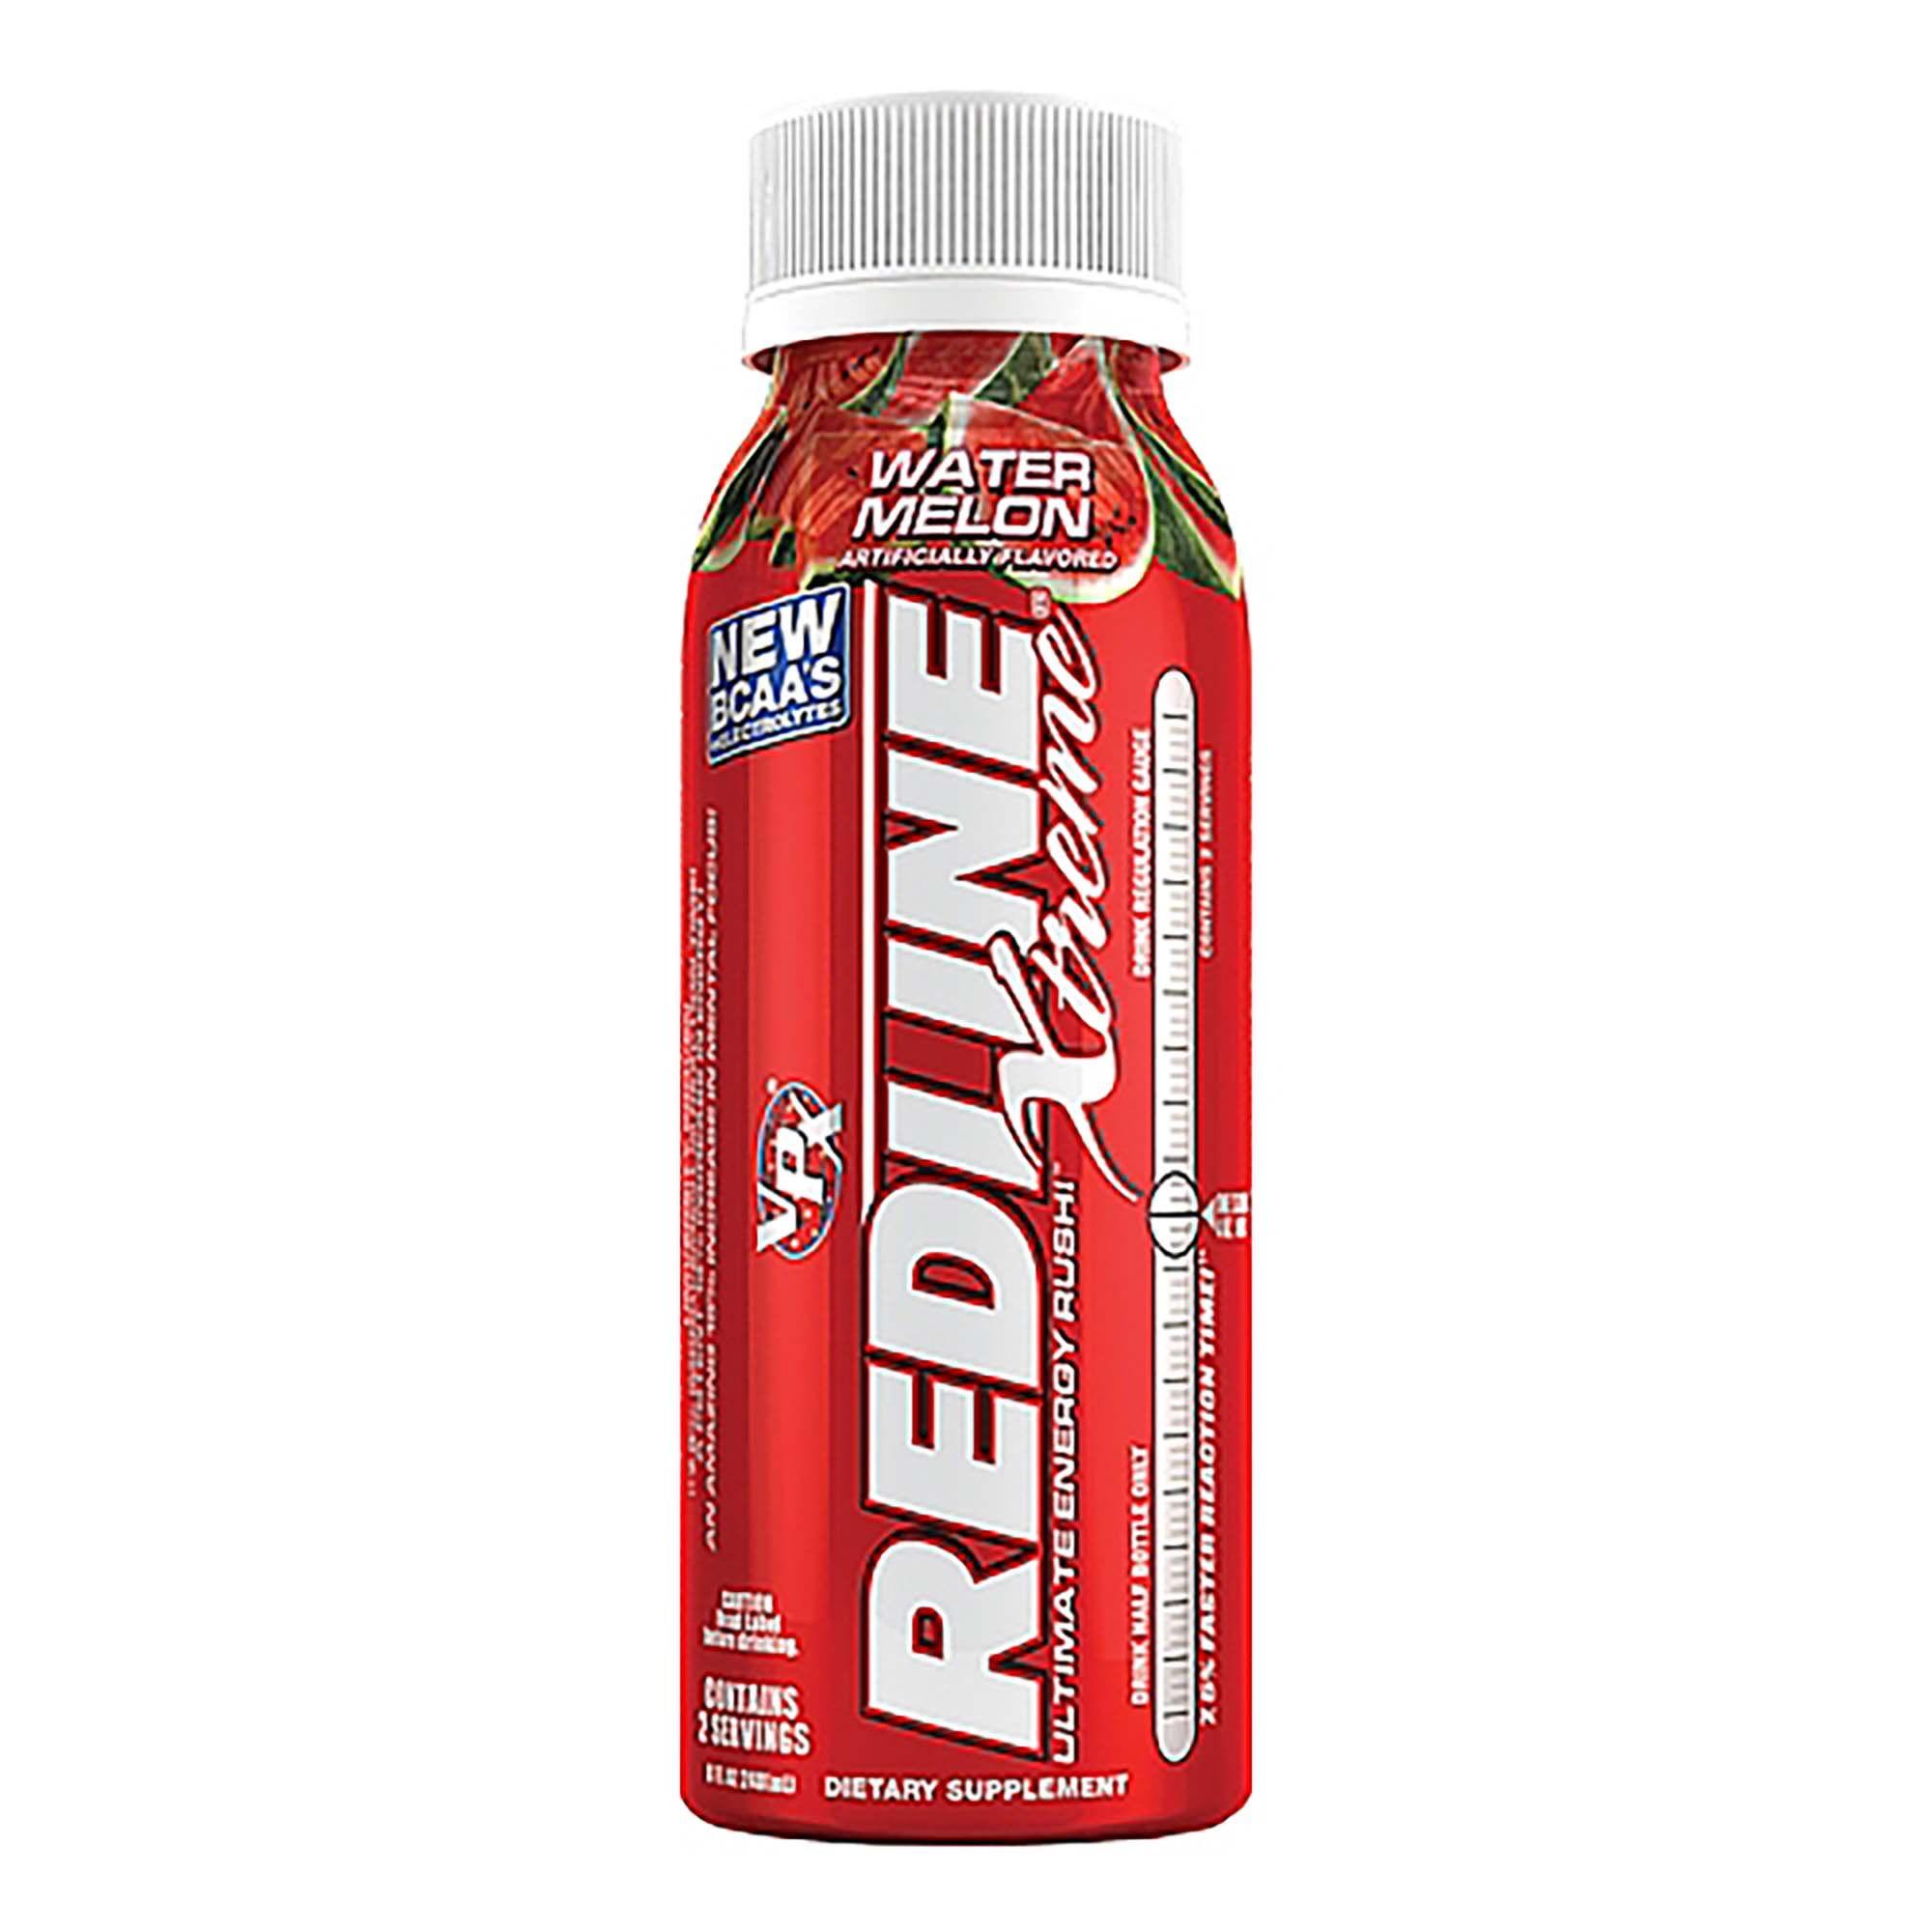 redline energy drink retailers